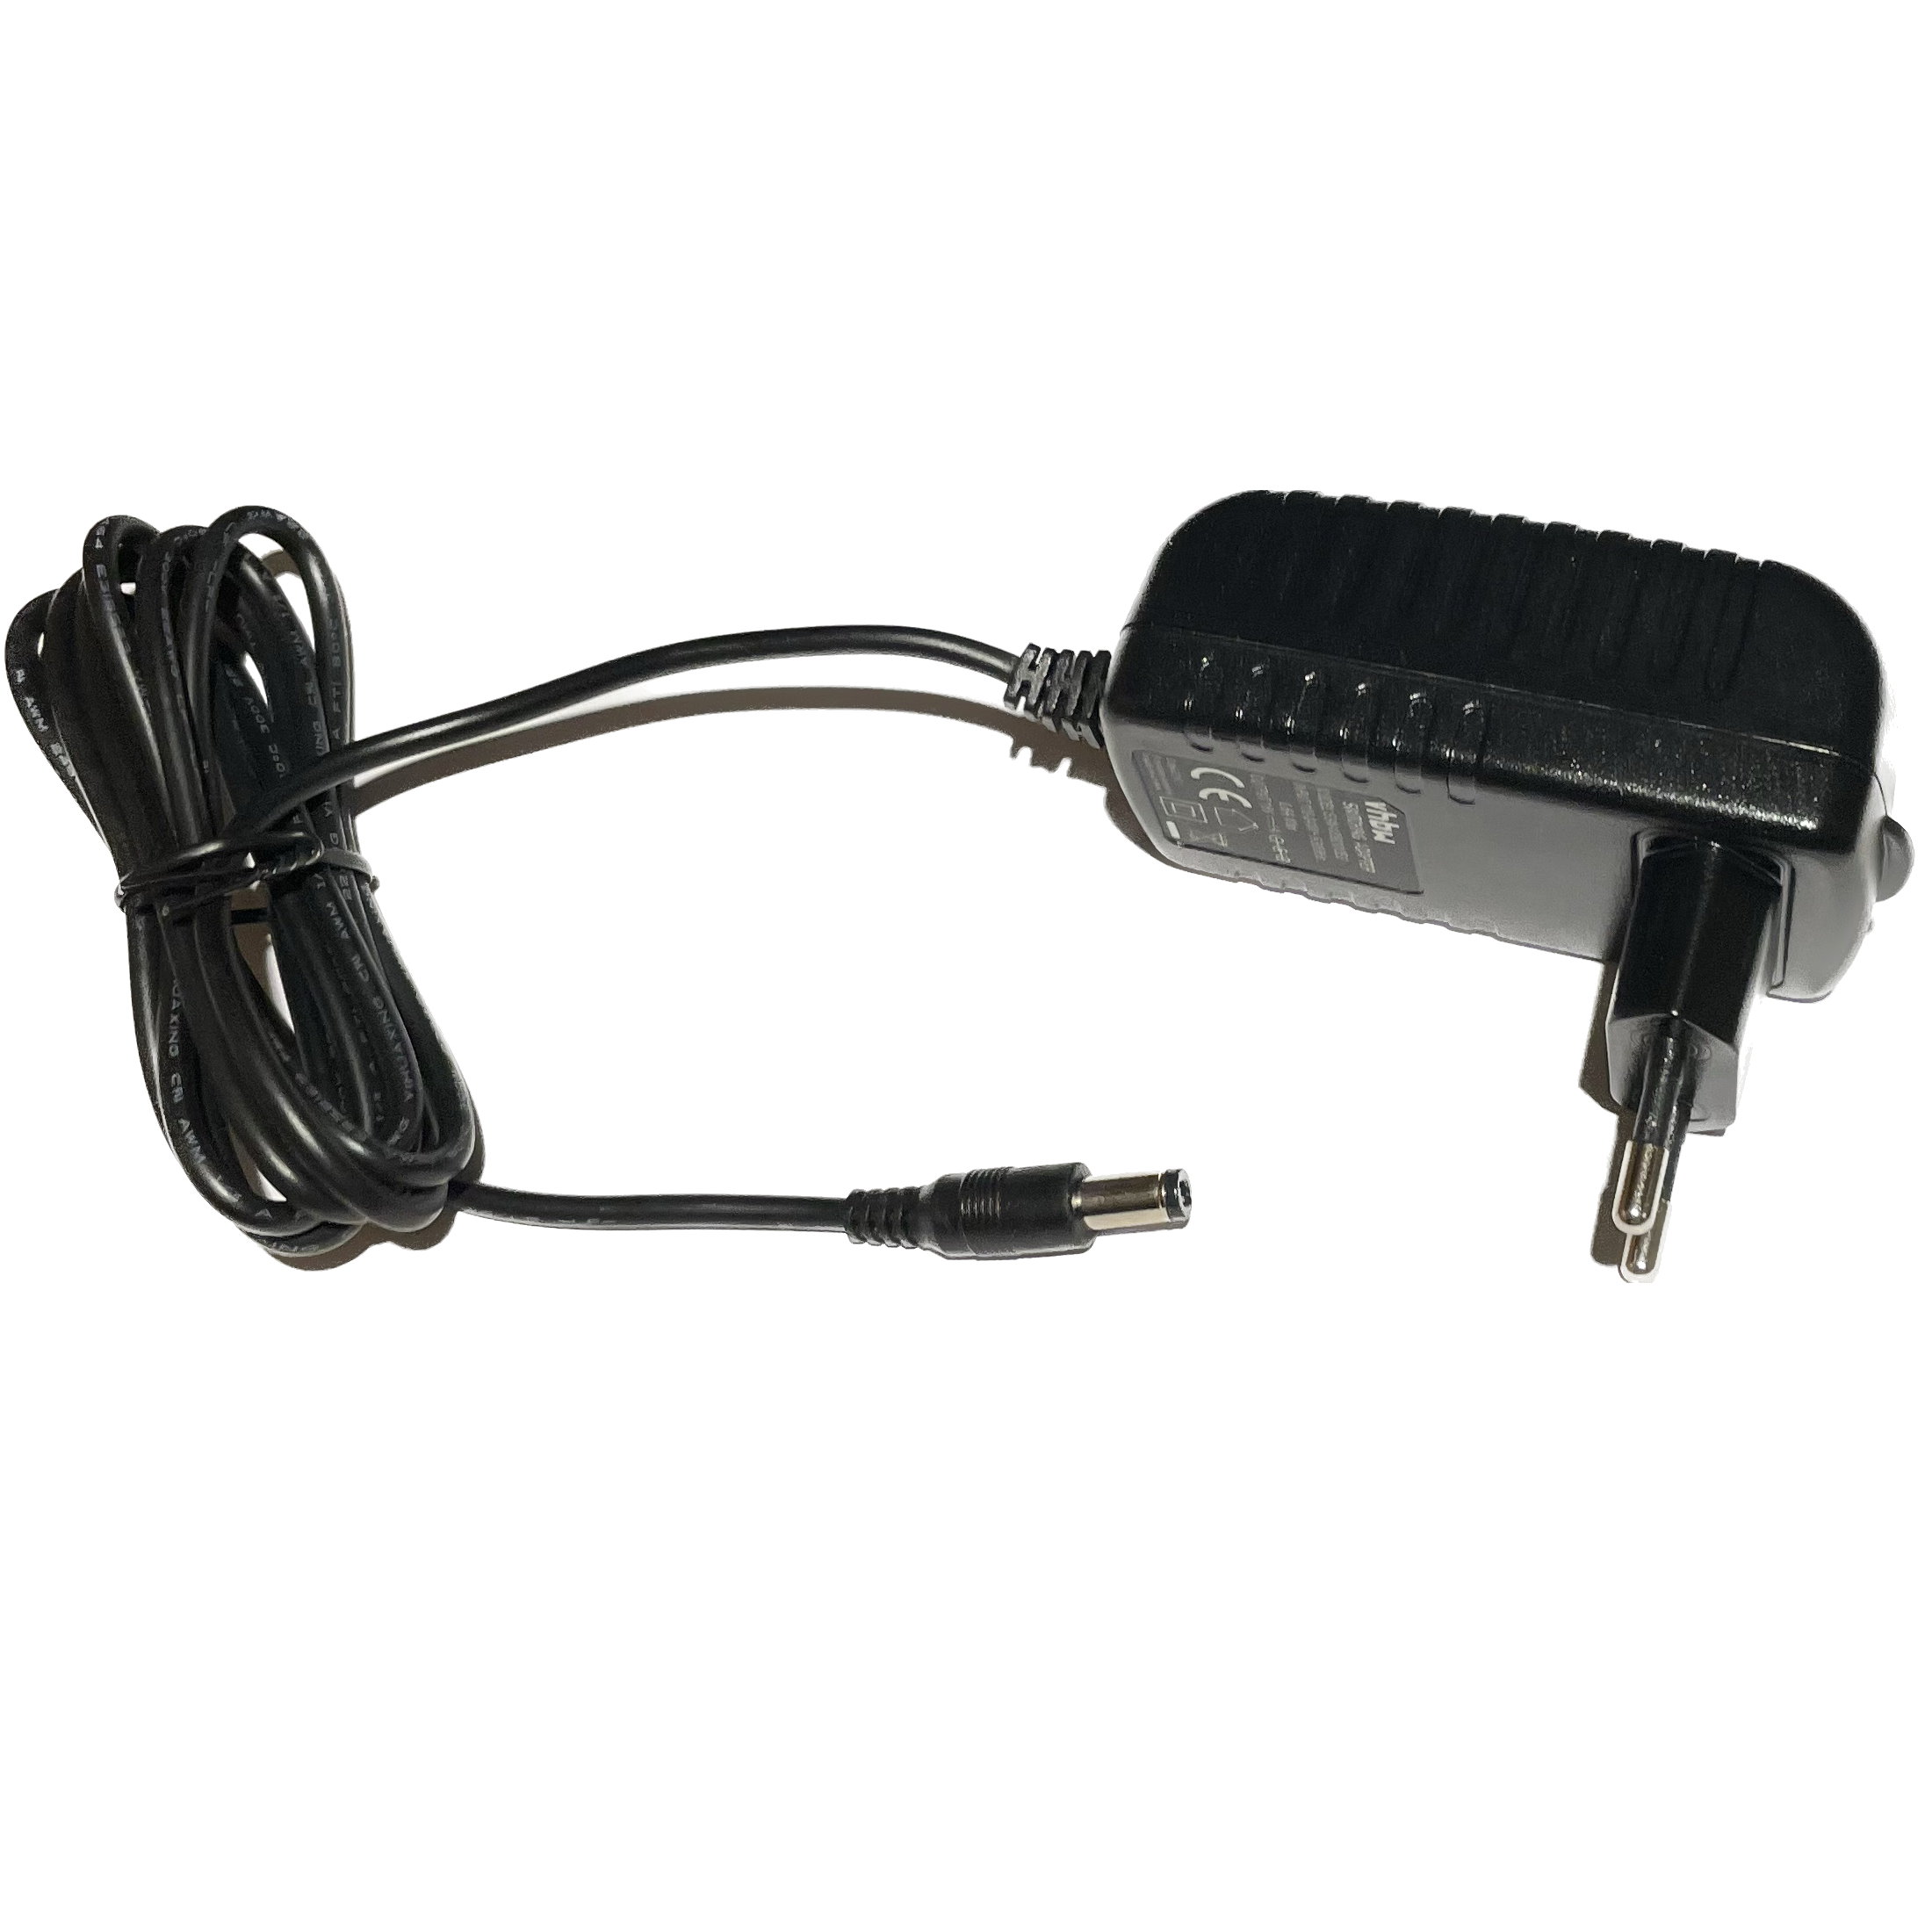 UL 18V DC Adapter Cord For Logitech Internet Radio X-R0001 930